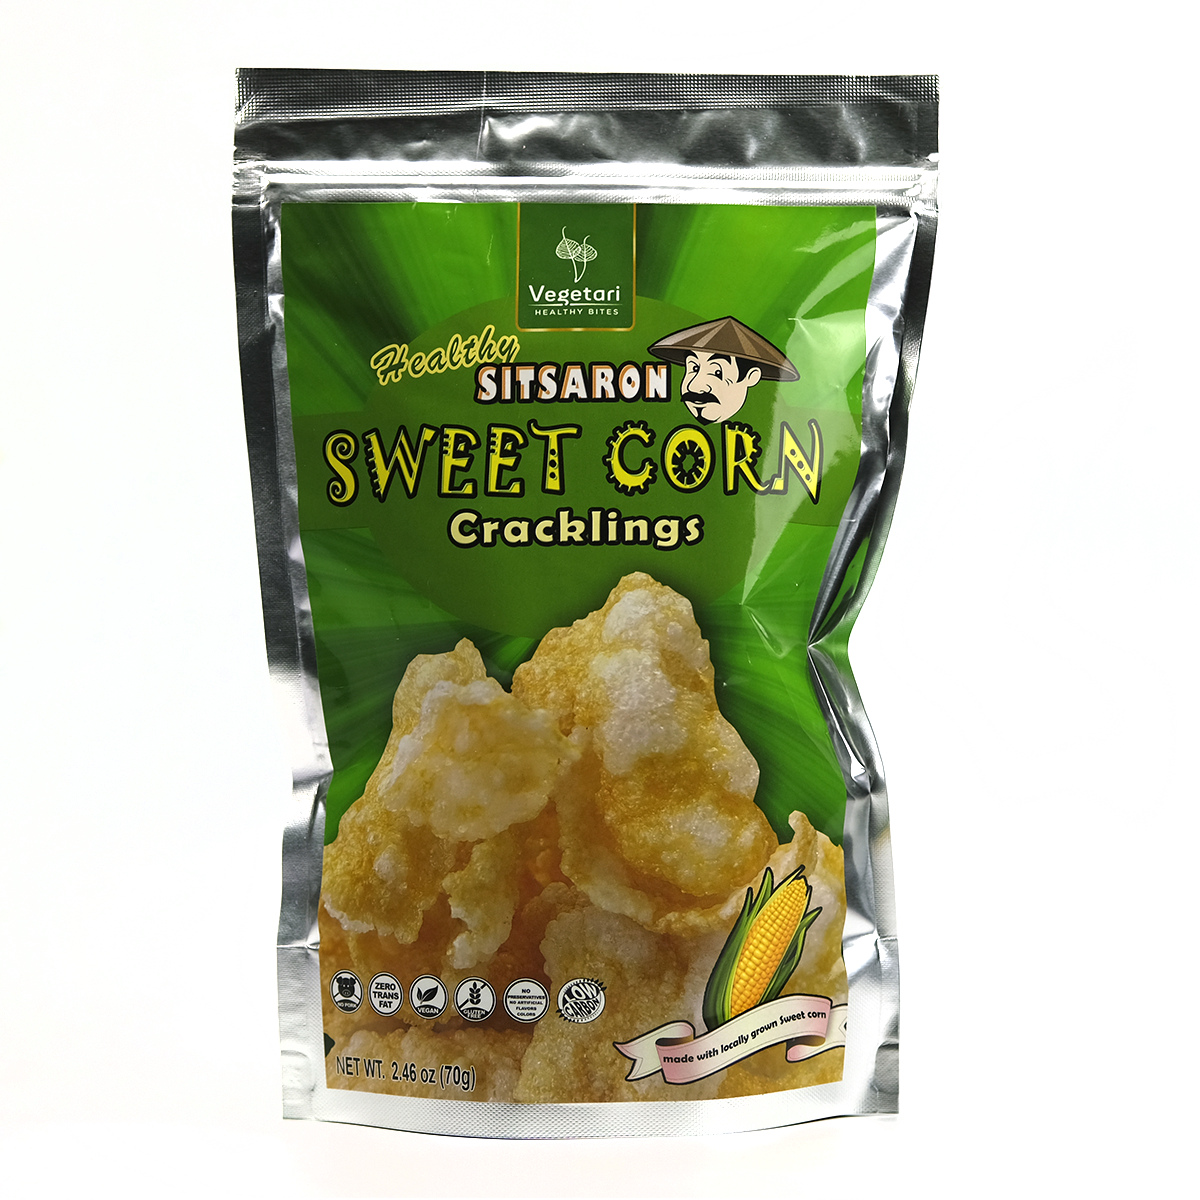 Sitsaron Sweet Corn Cracklings